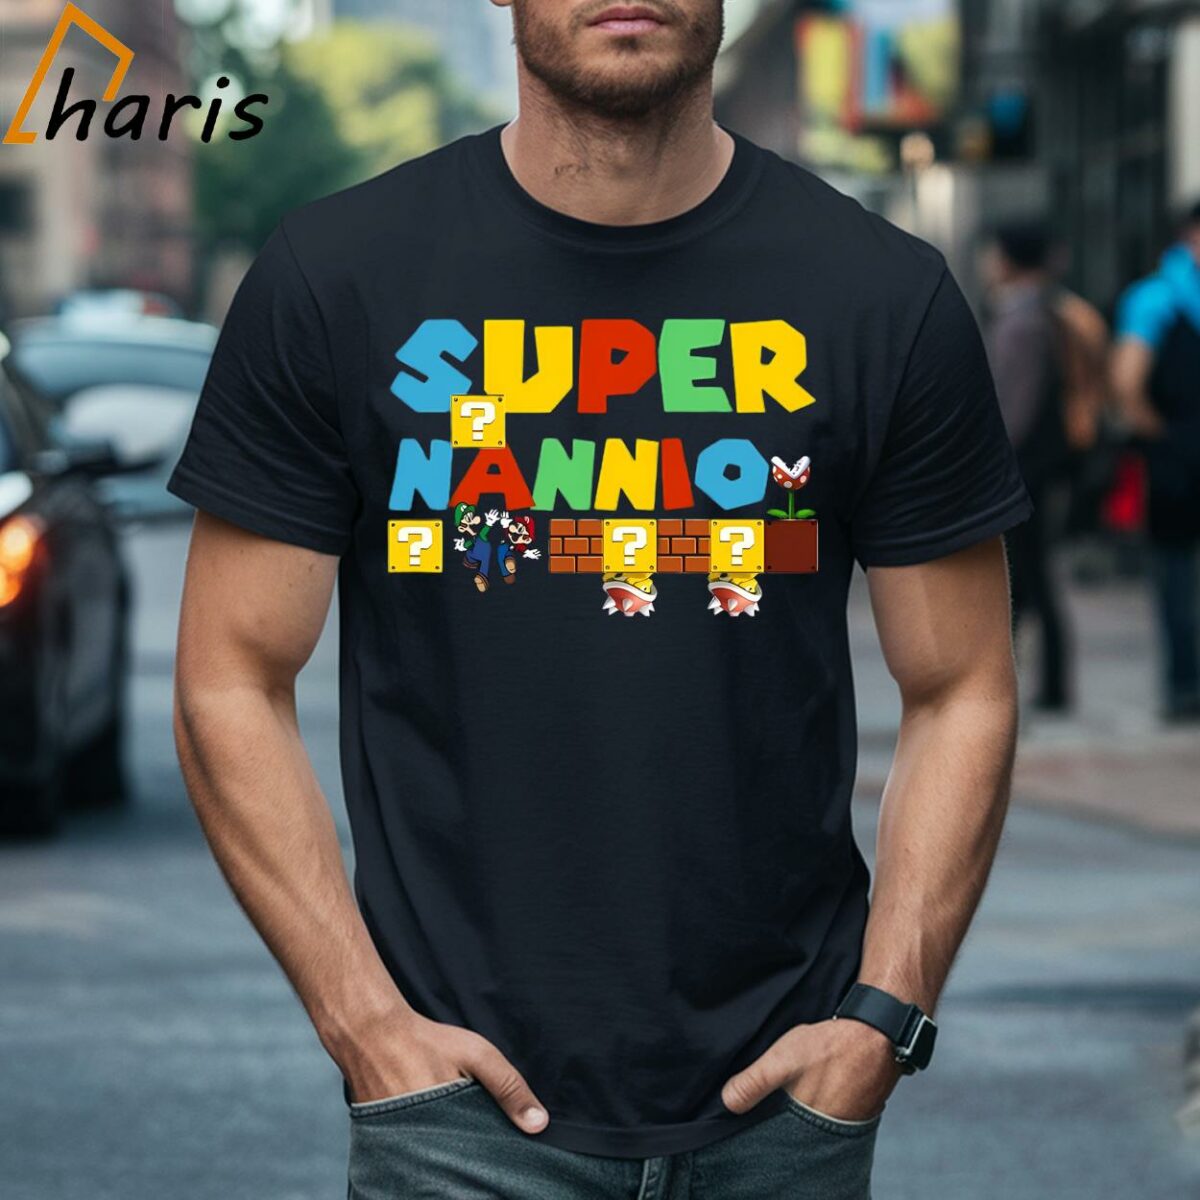 Super Nannio Super Mario Mothers Day T shirt 1 T shirt